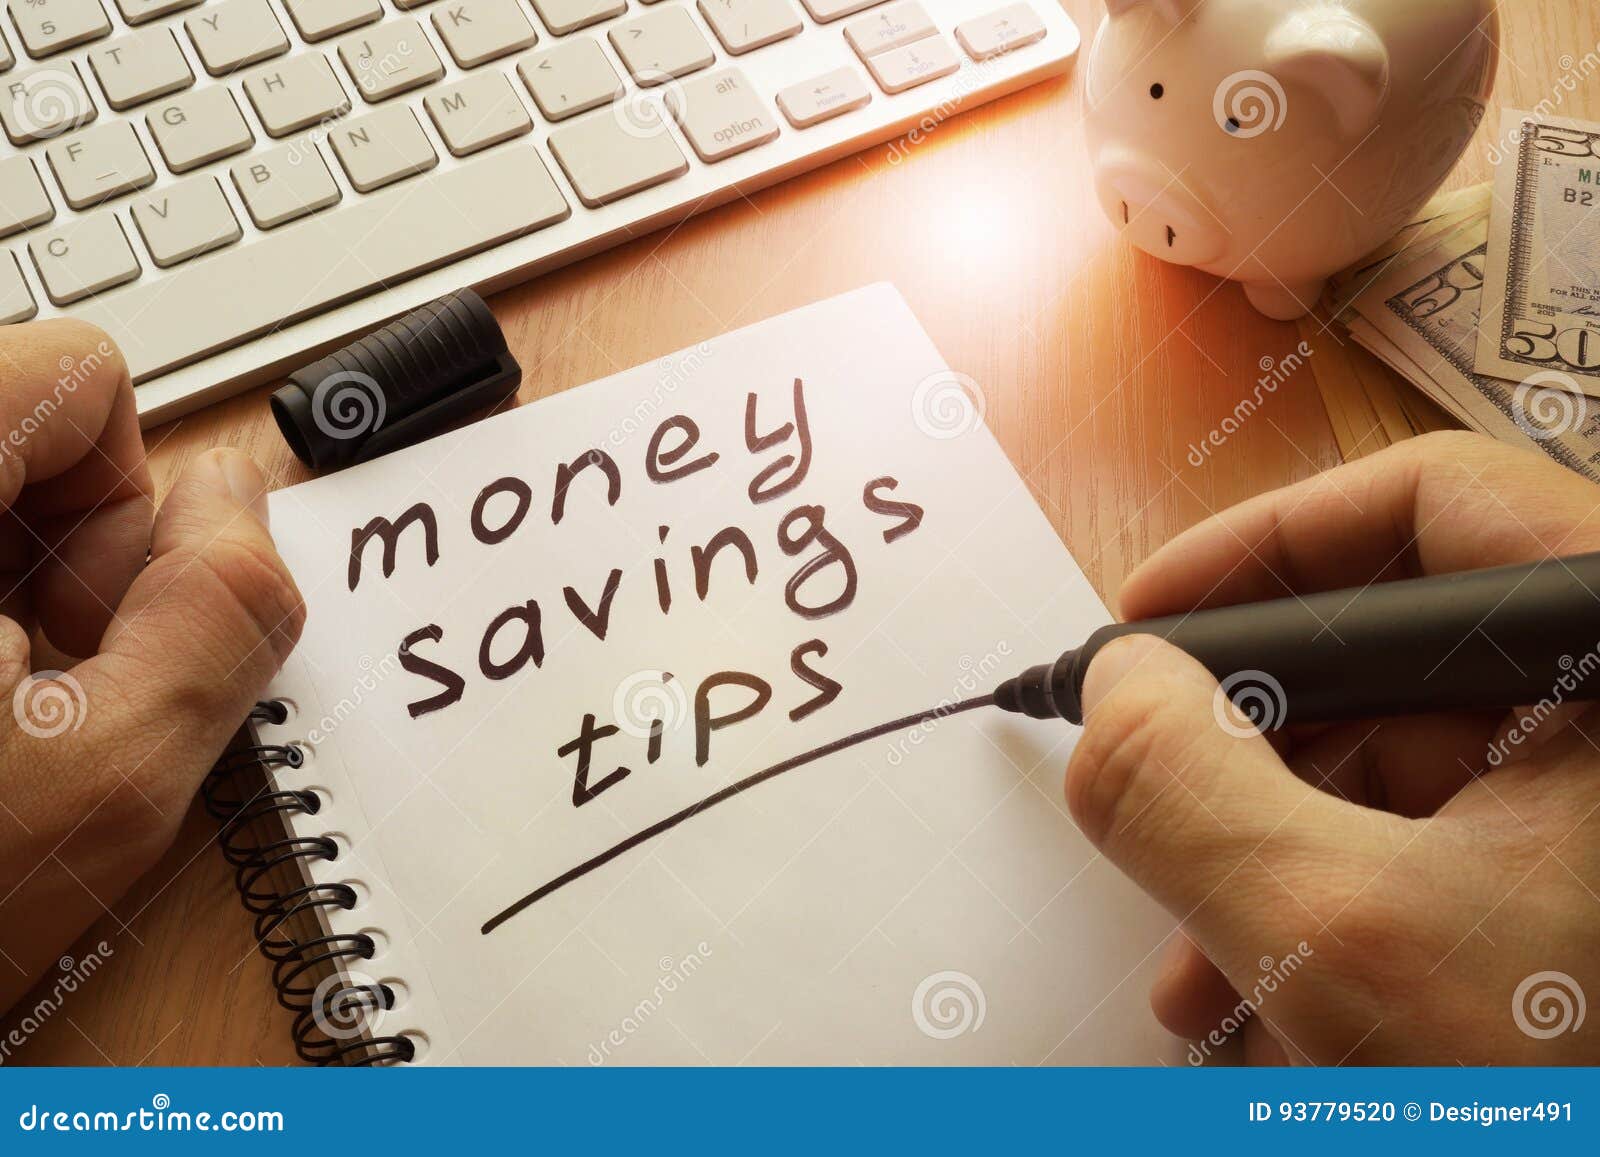 money saving tips.